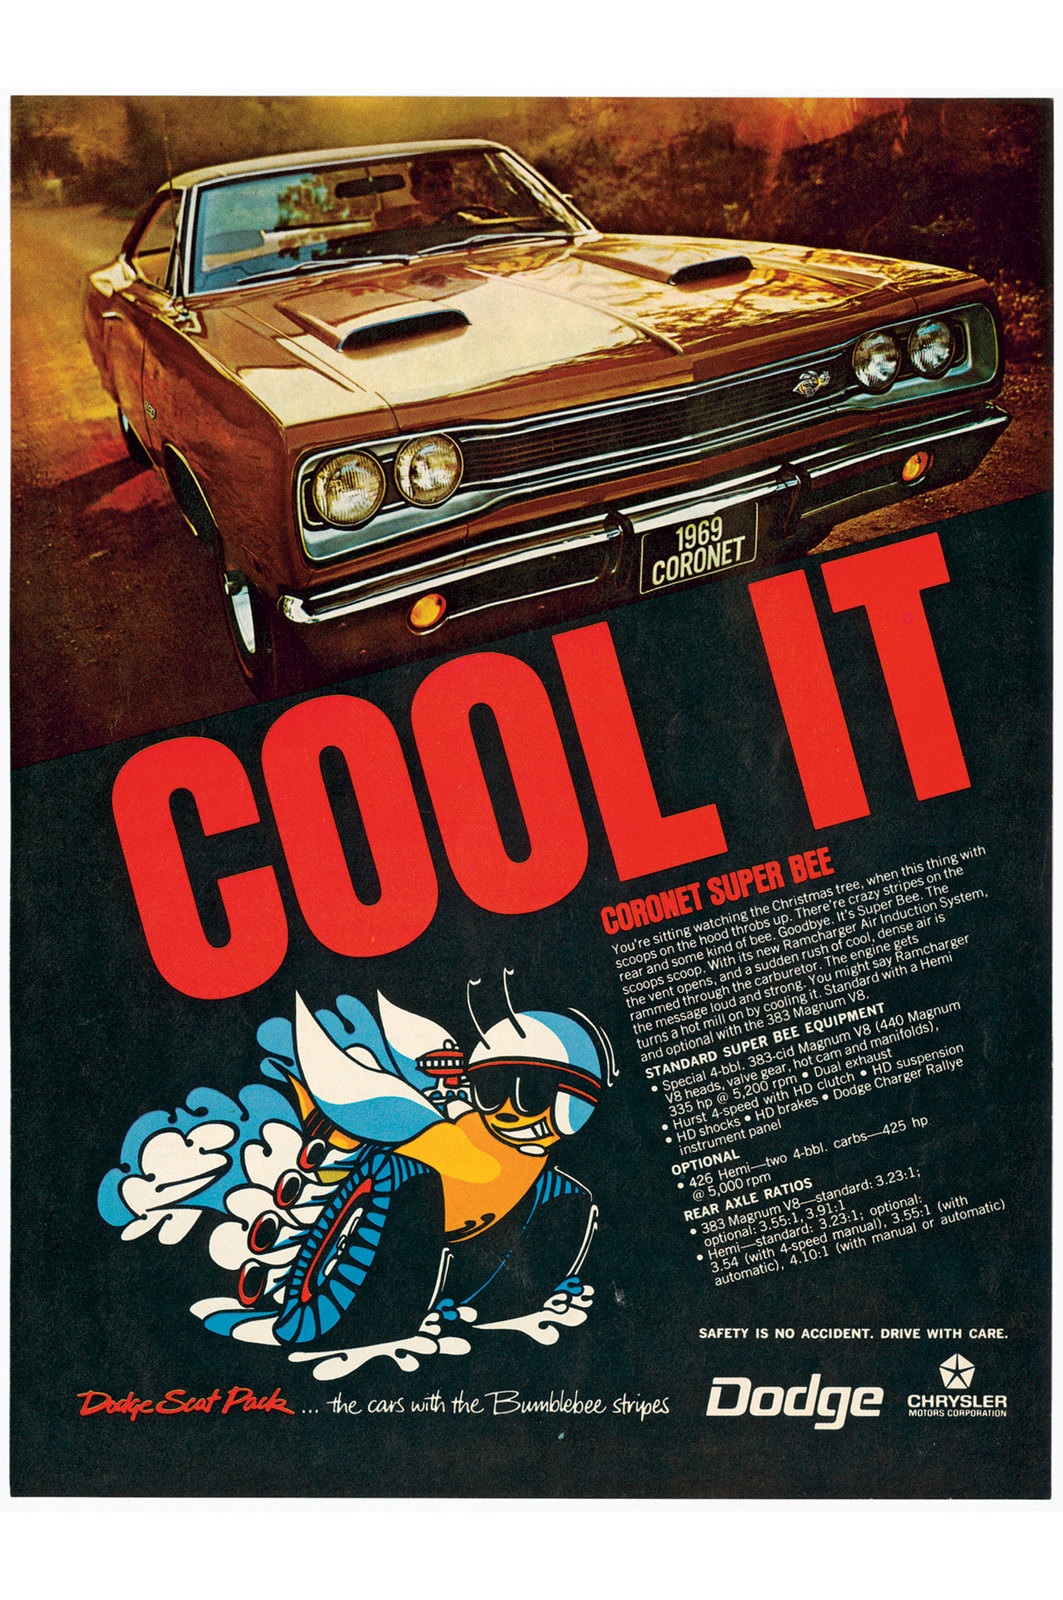 09-cool-it-1969-super-bee-coronet.jpg